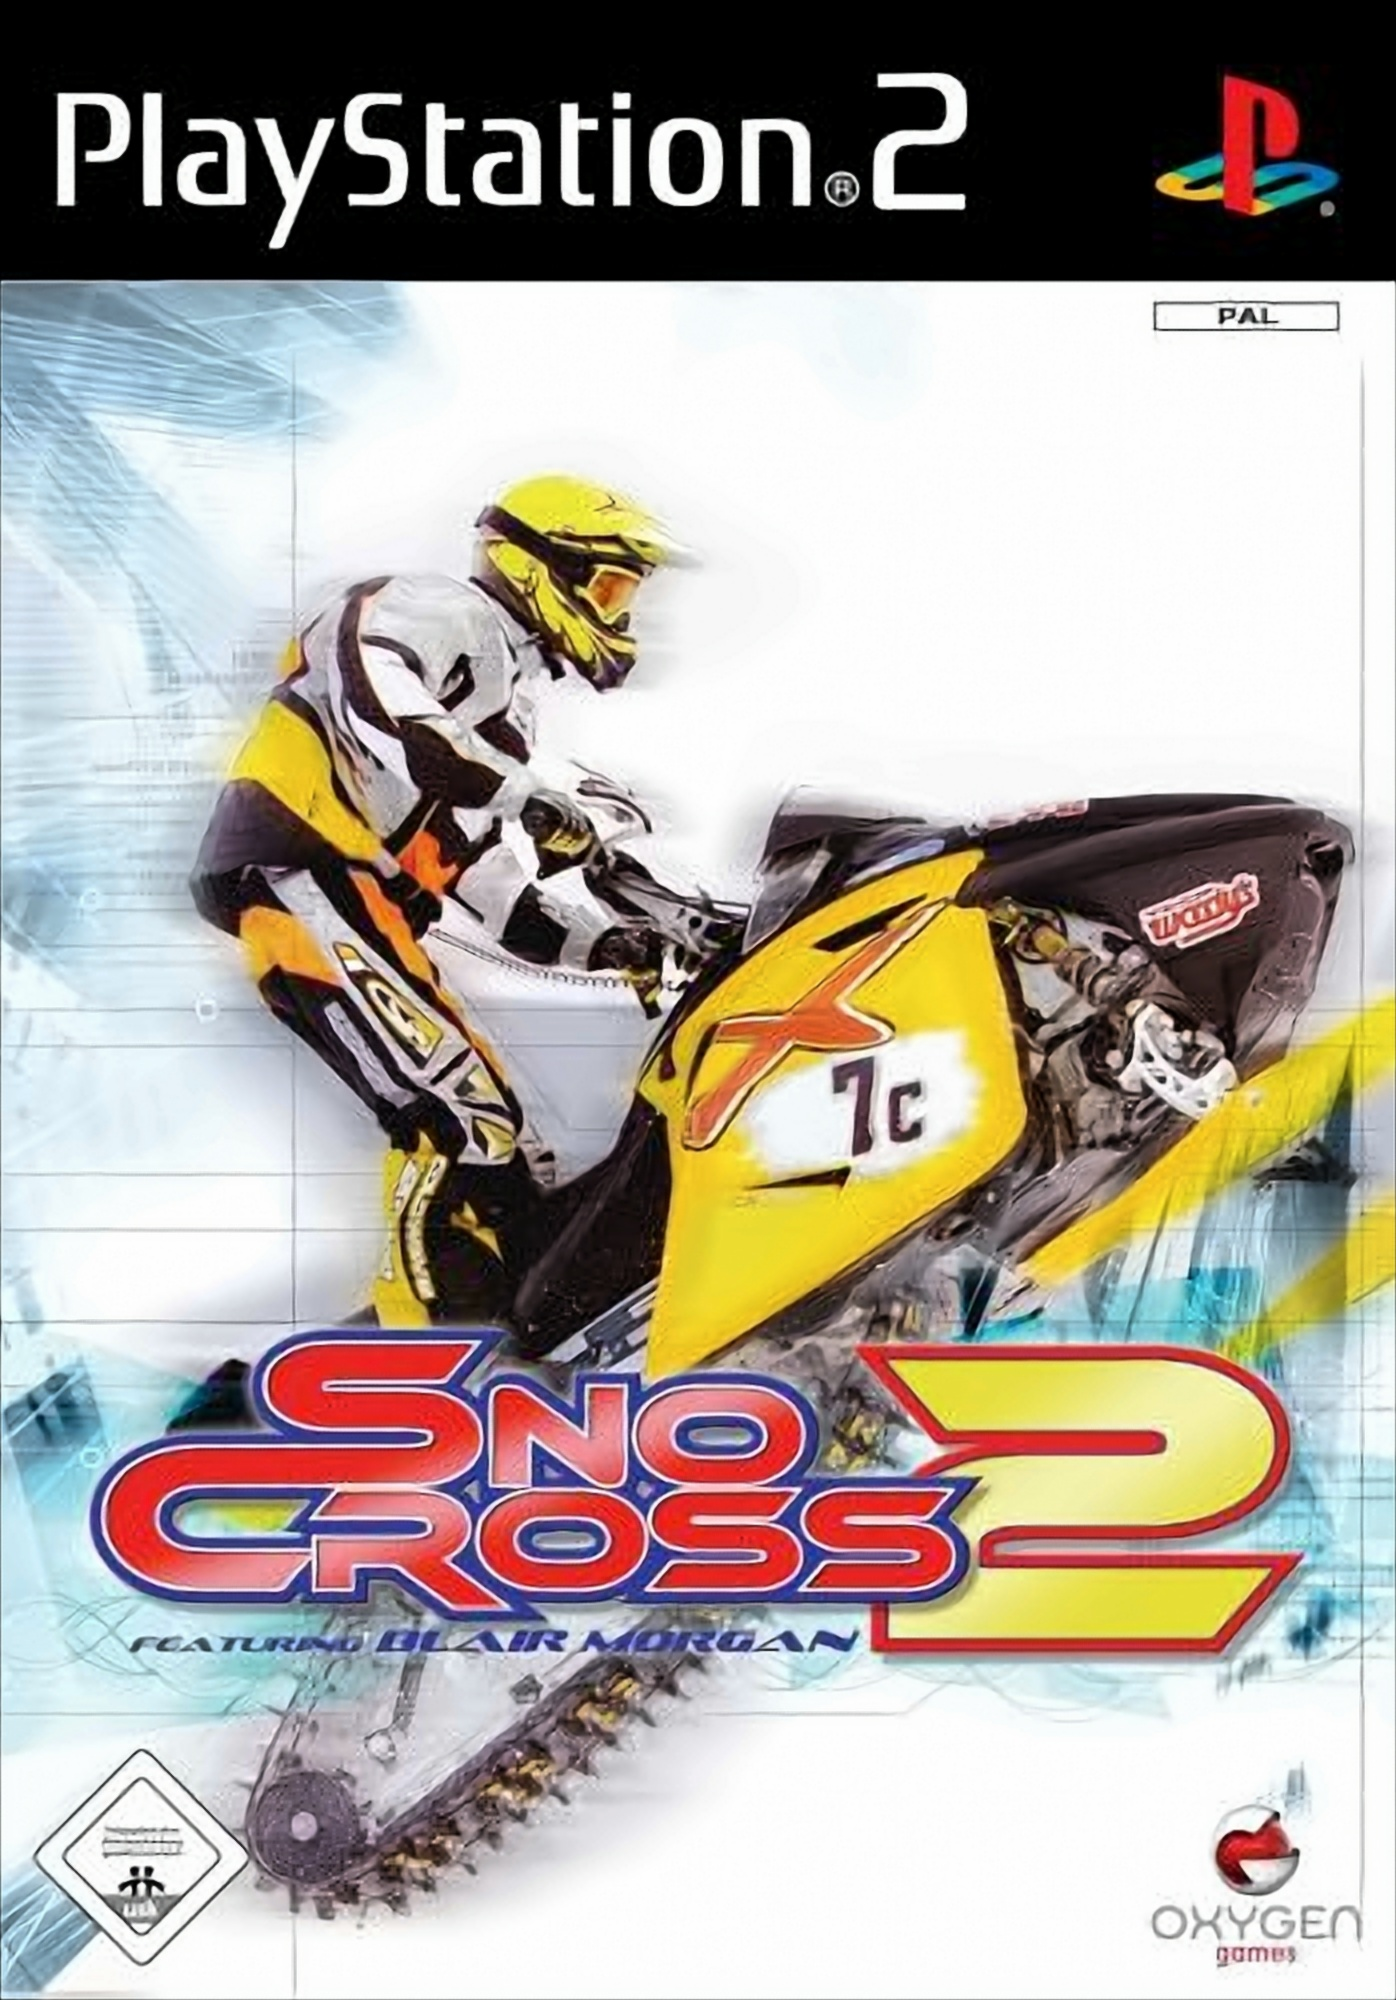 Cross Blair feat. - Morgan Sno 2 2] [PlayStation